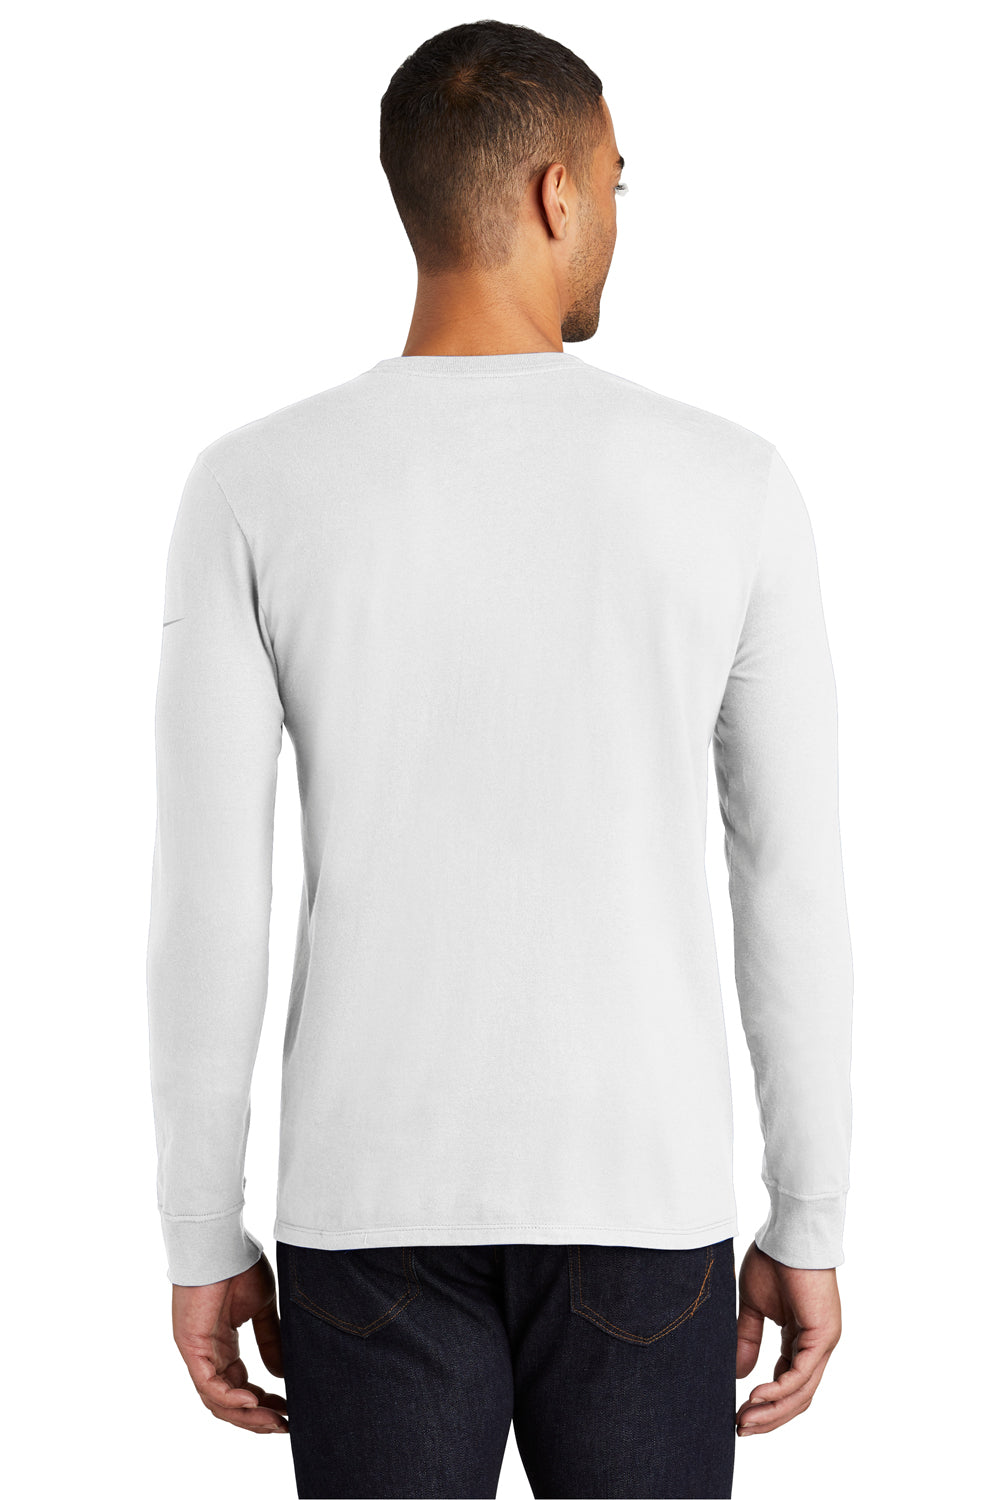 Nike NKBQ5232 Mens Core Long Sleeve Crewneck T-Shirt White Back